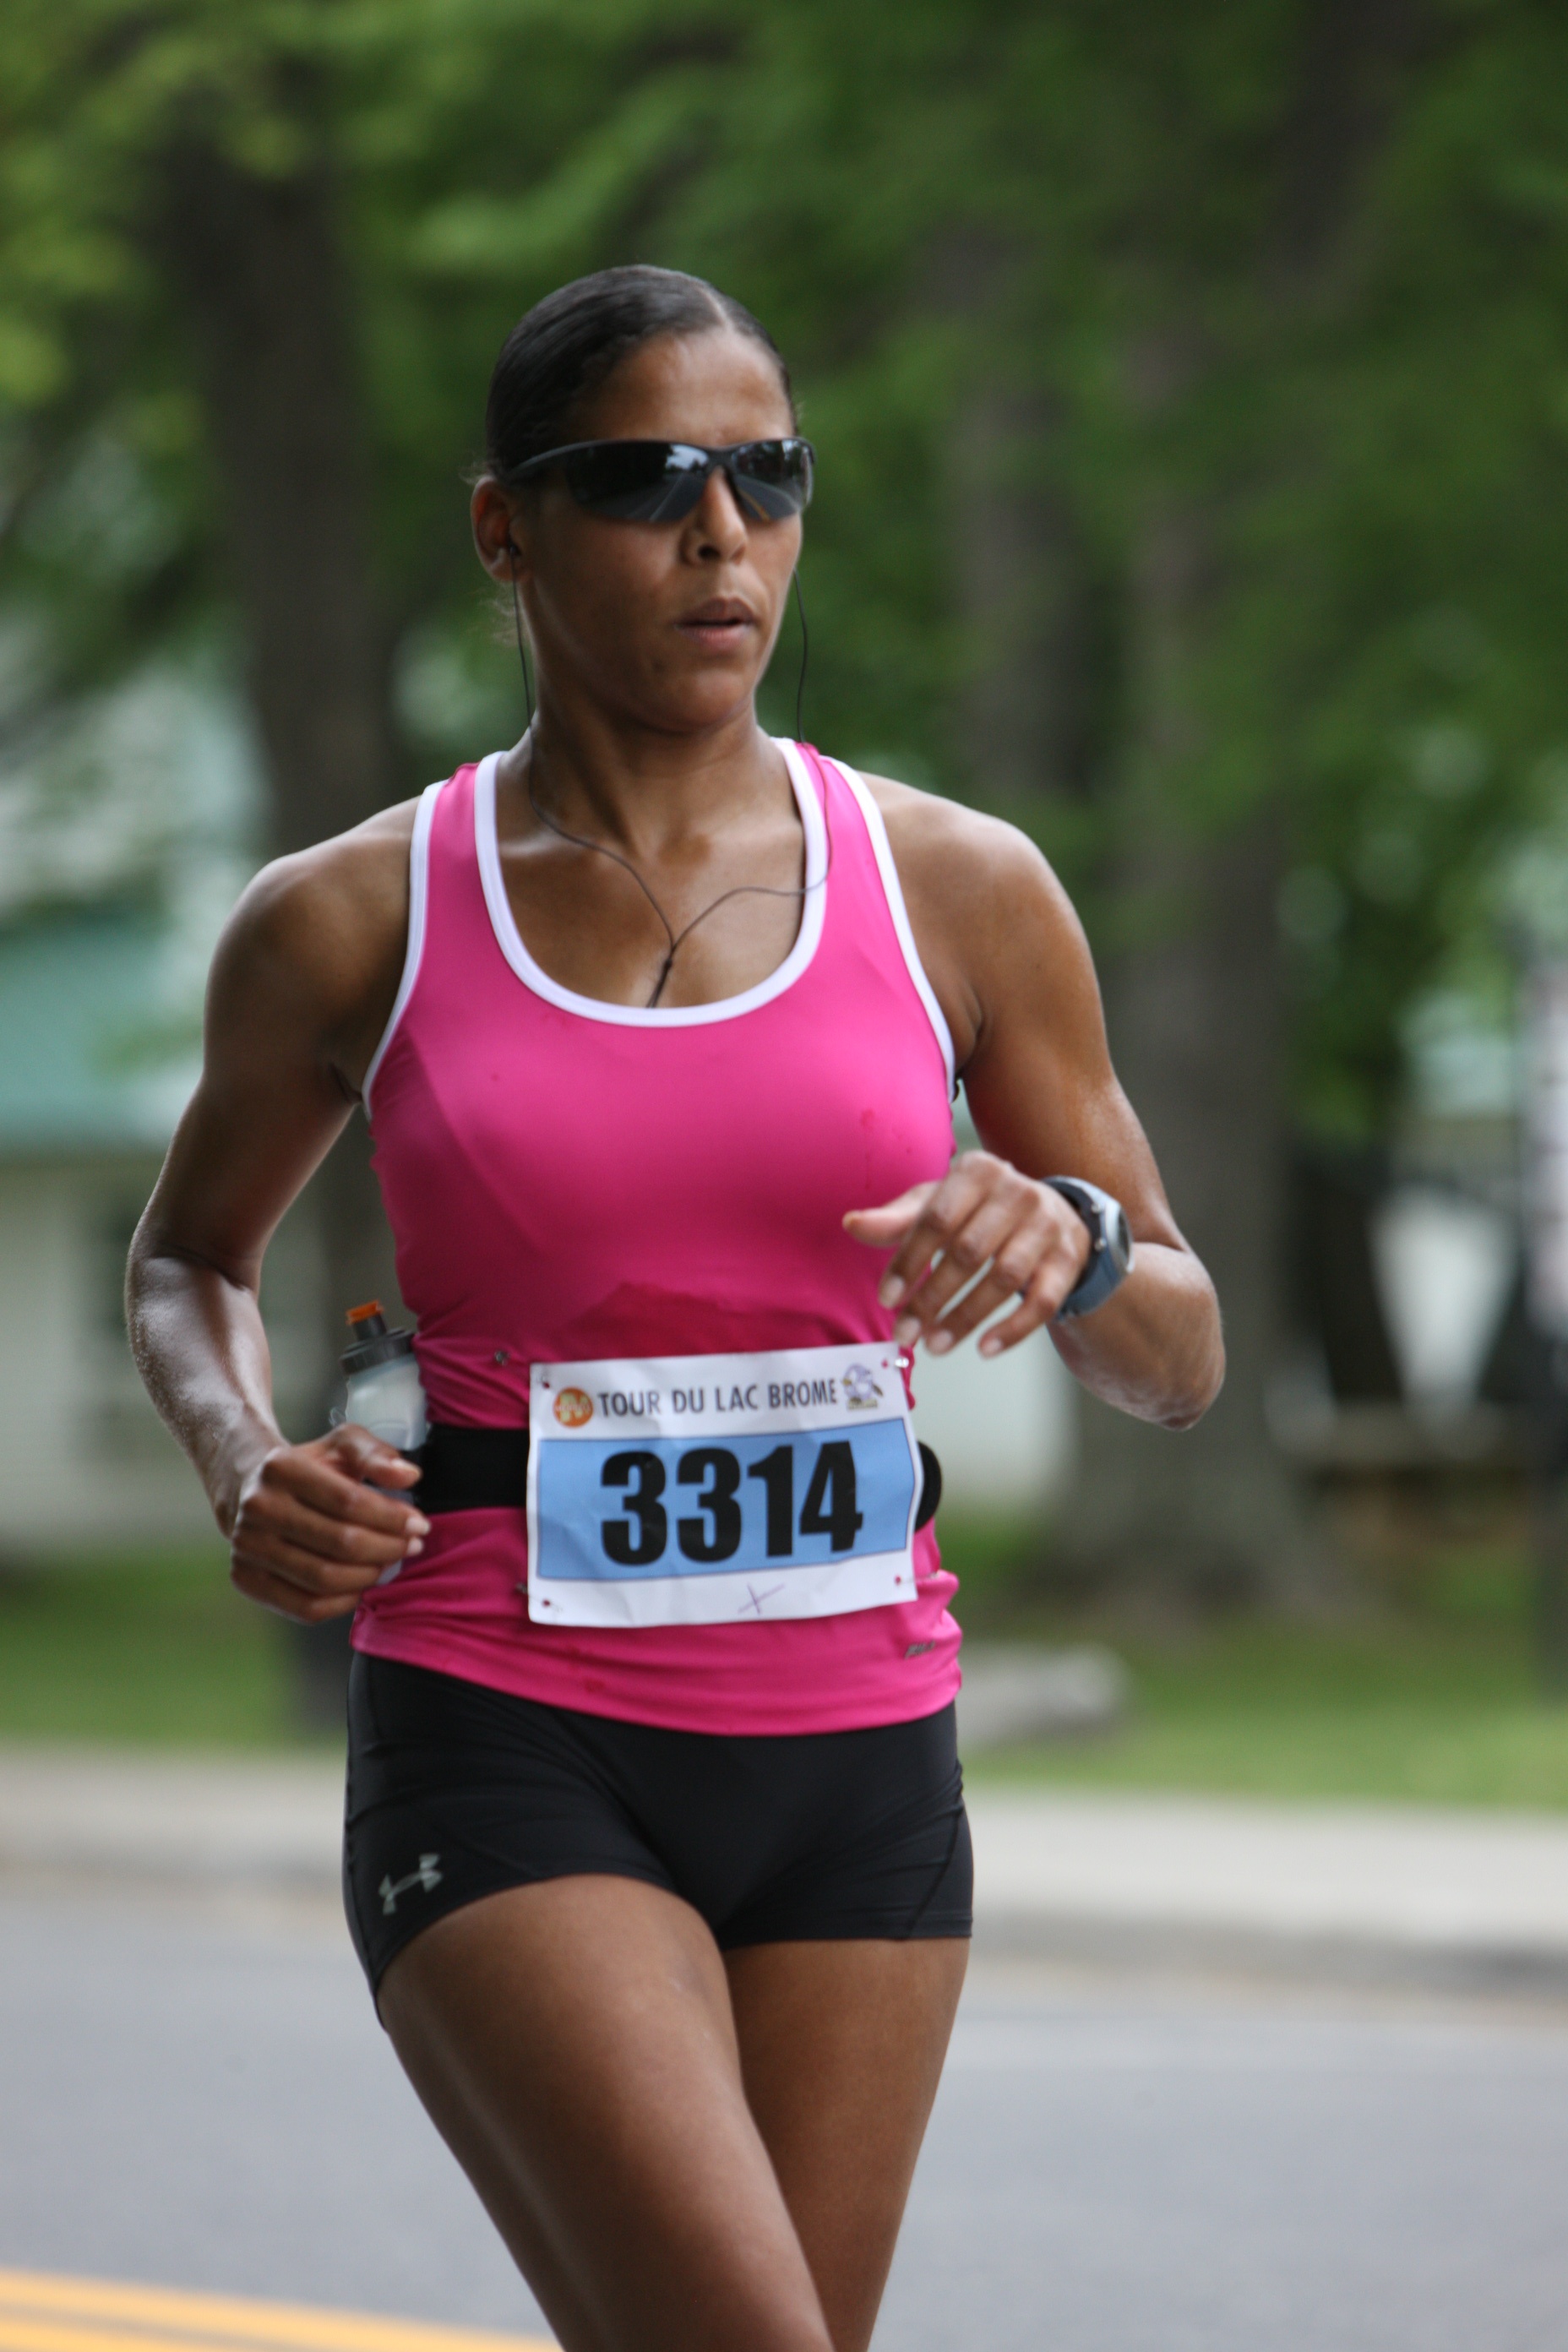 Caroline Lavallée runs wearing a race bib